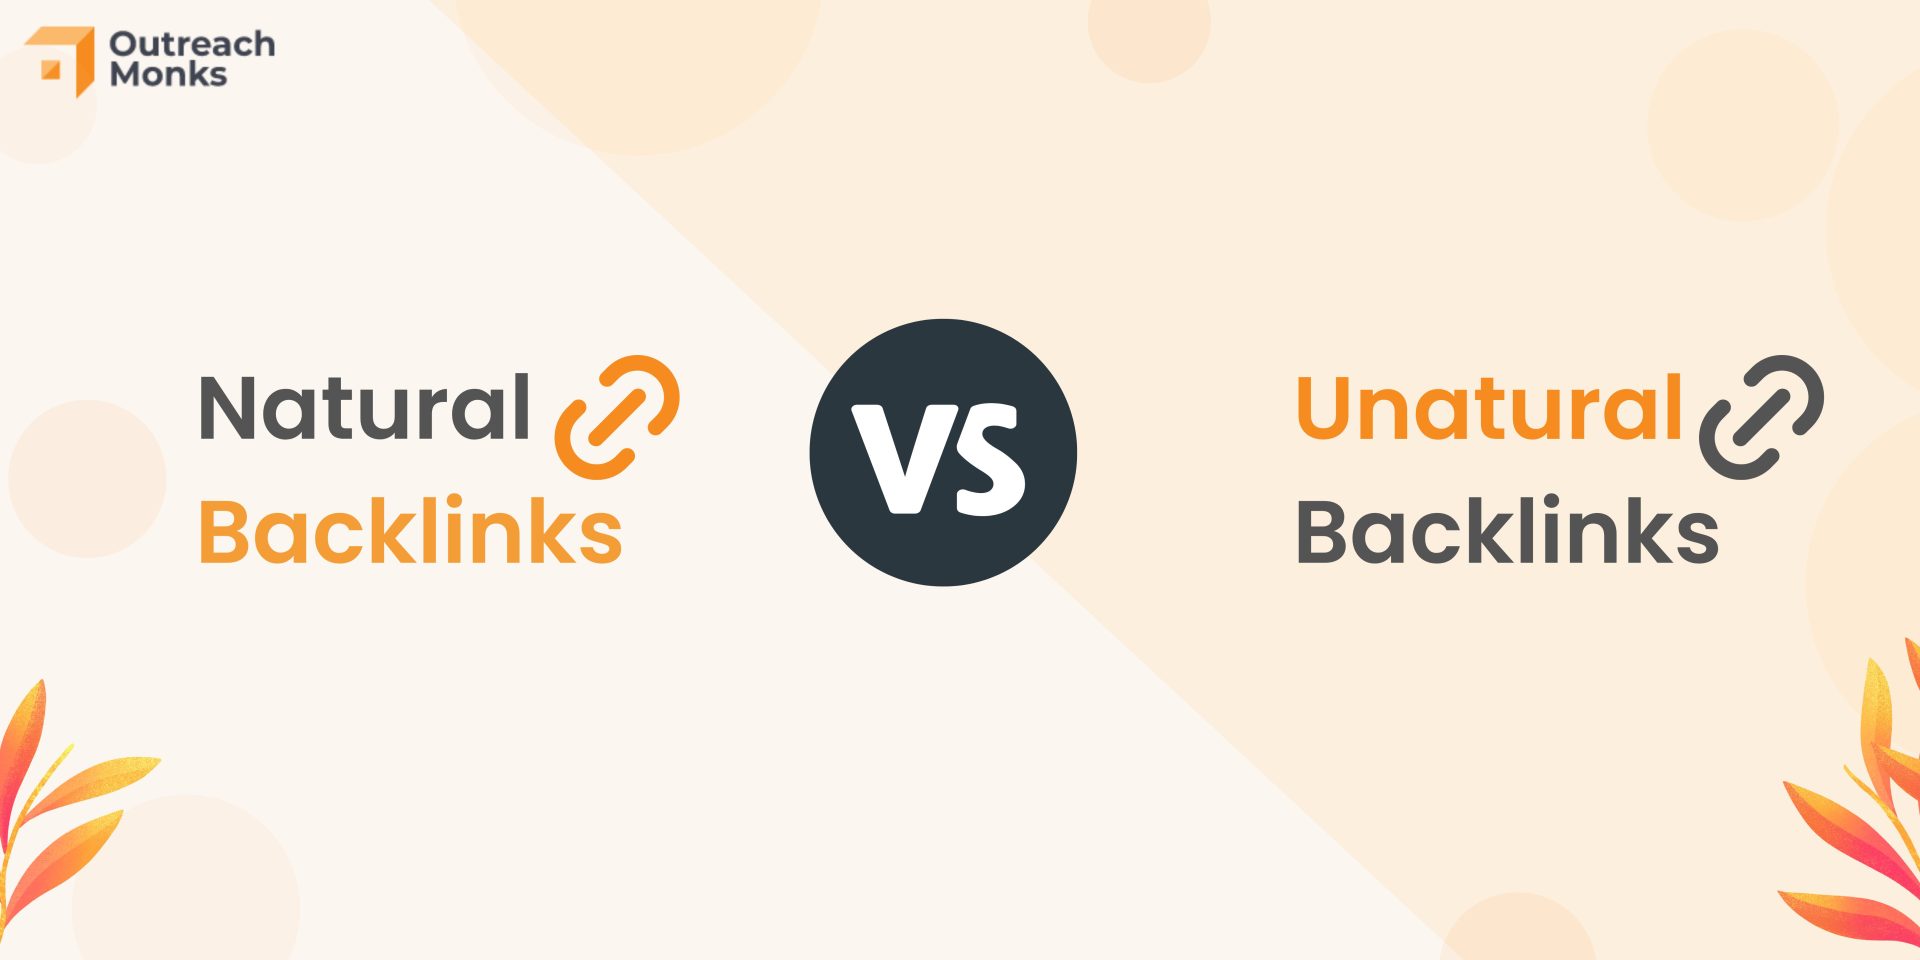 Natural vs. Unnatural Backlinks: A Battle of SEO – Who Wins?